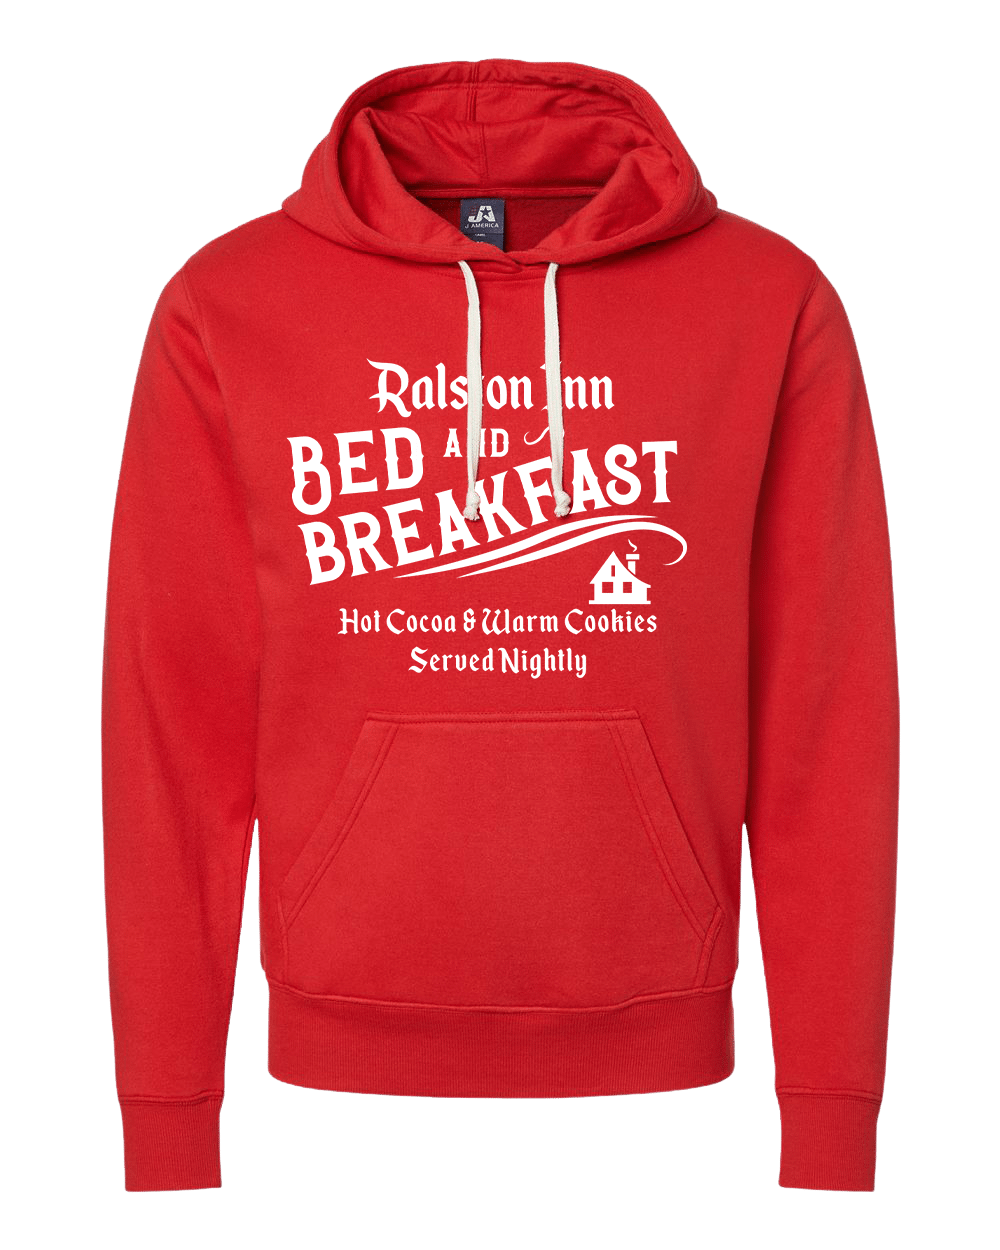 Ralston Inn Bed & Breakfast Dressing Festive red hoodie